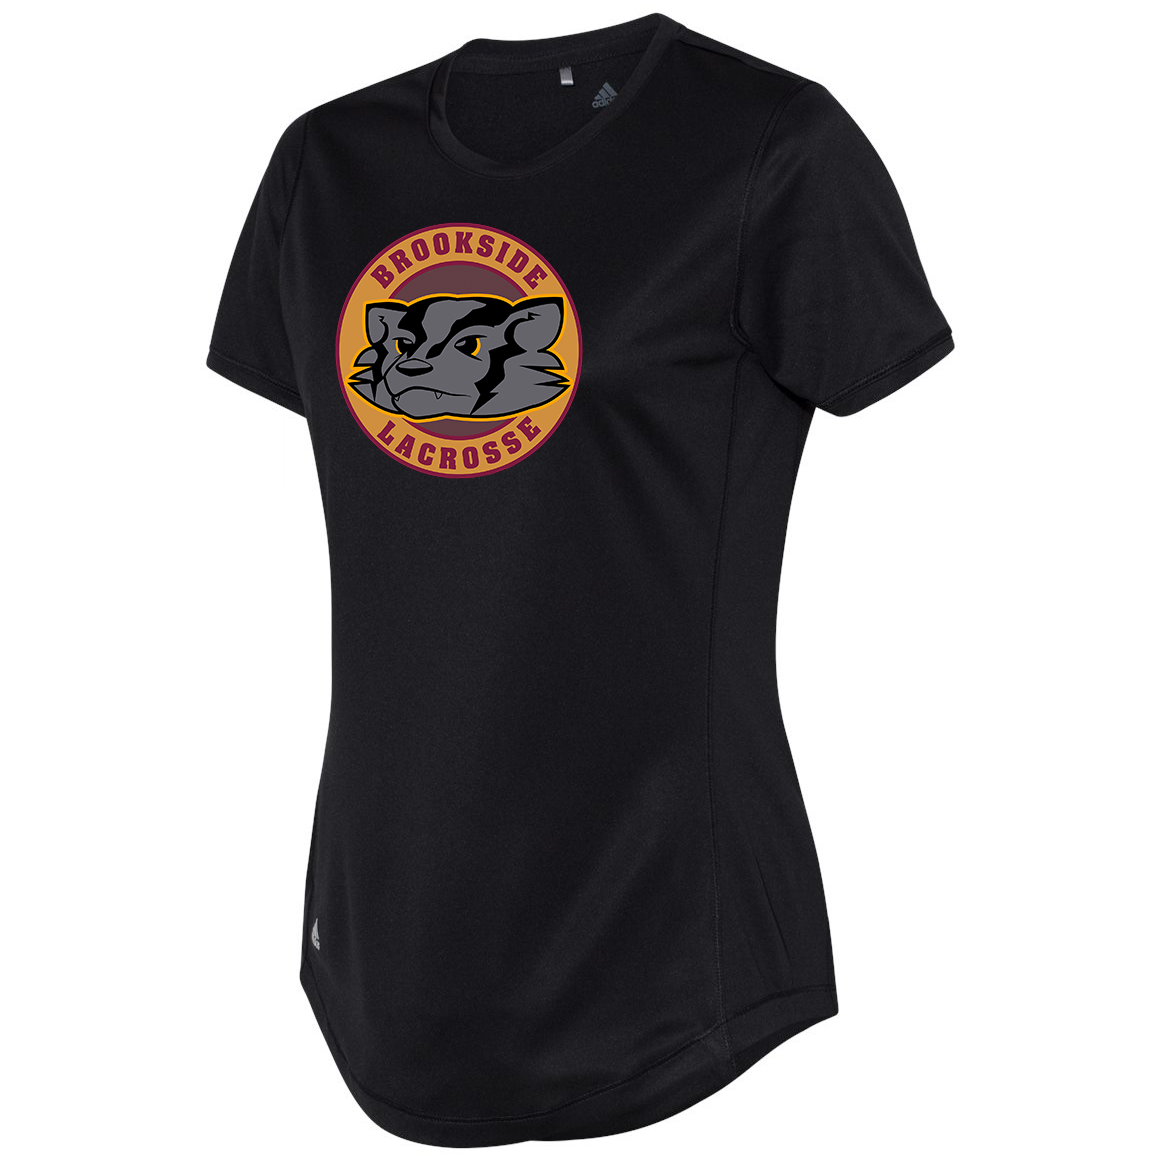 Brookside Lacrosse Women's Adidas Sport T-Shirt